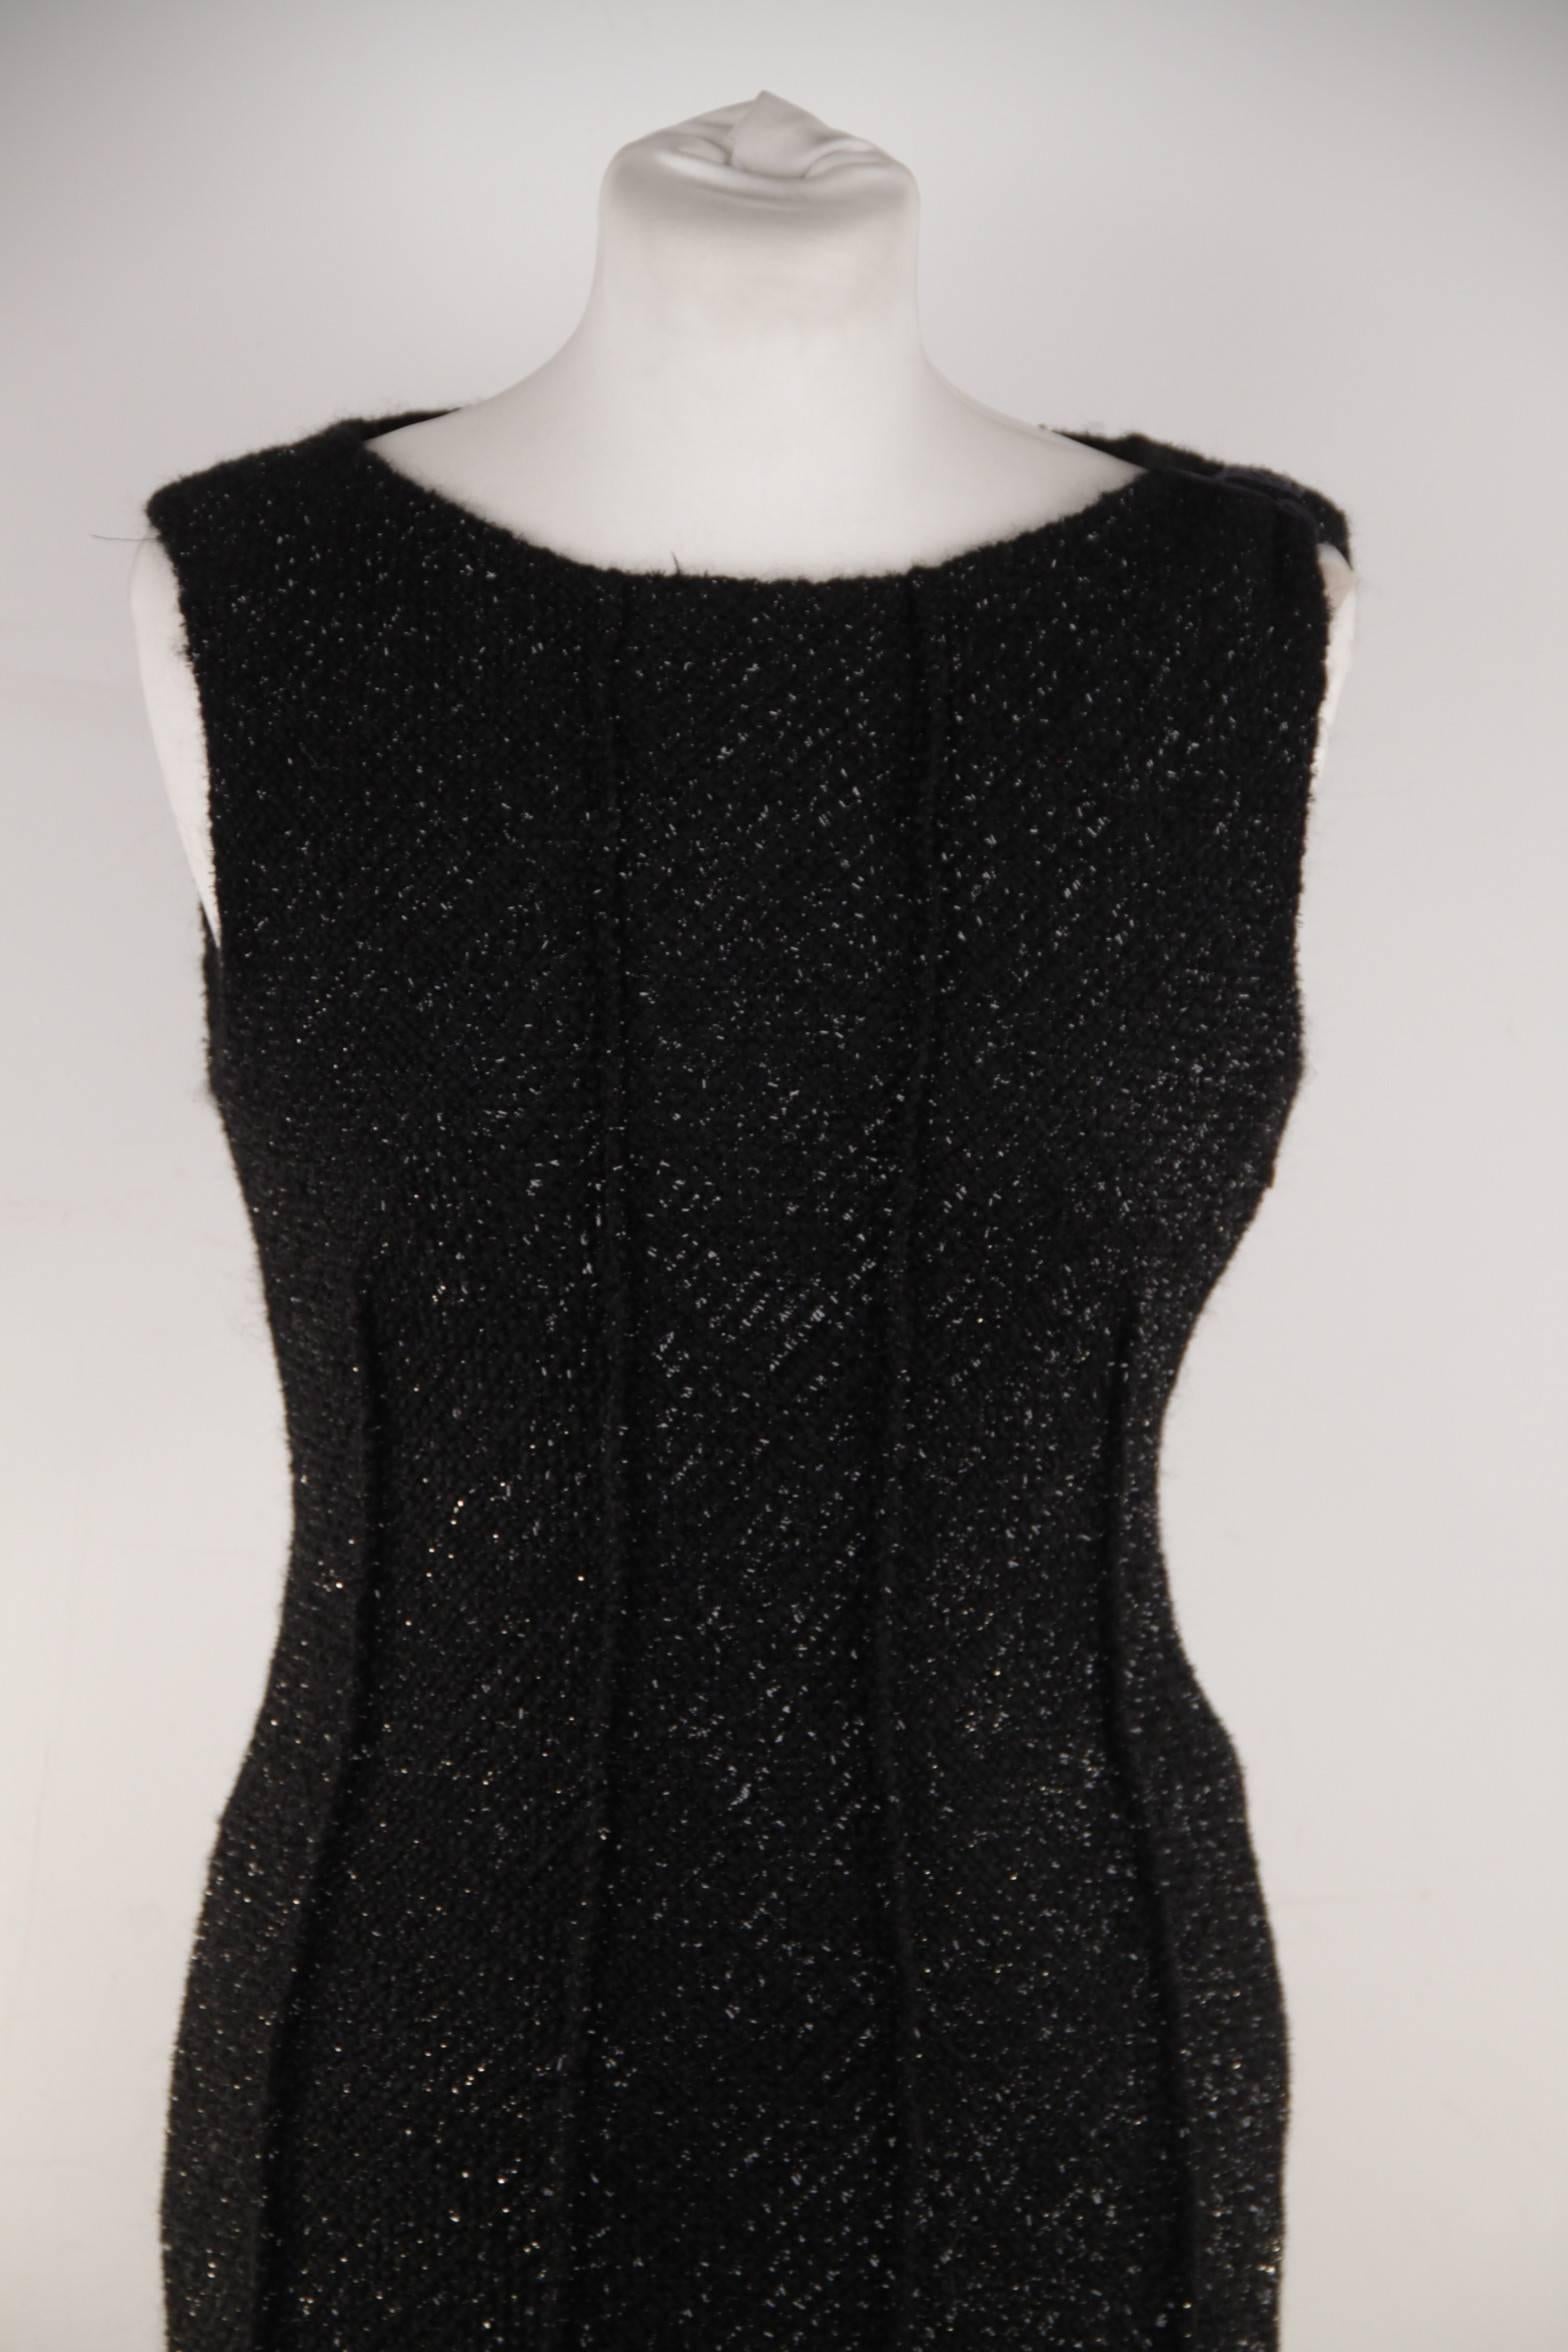 Black ALBERTA FERRETTI Italian Boucle Tweed LITTLE BLACK DRESS Sleeveless Sz 44 IT